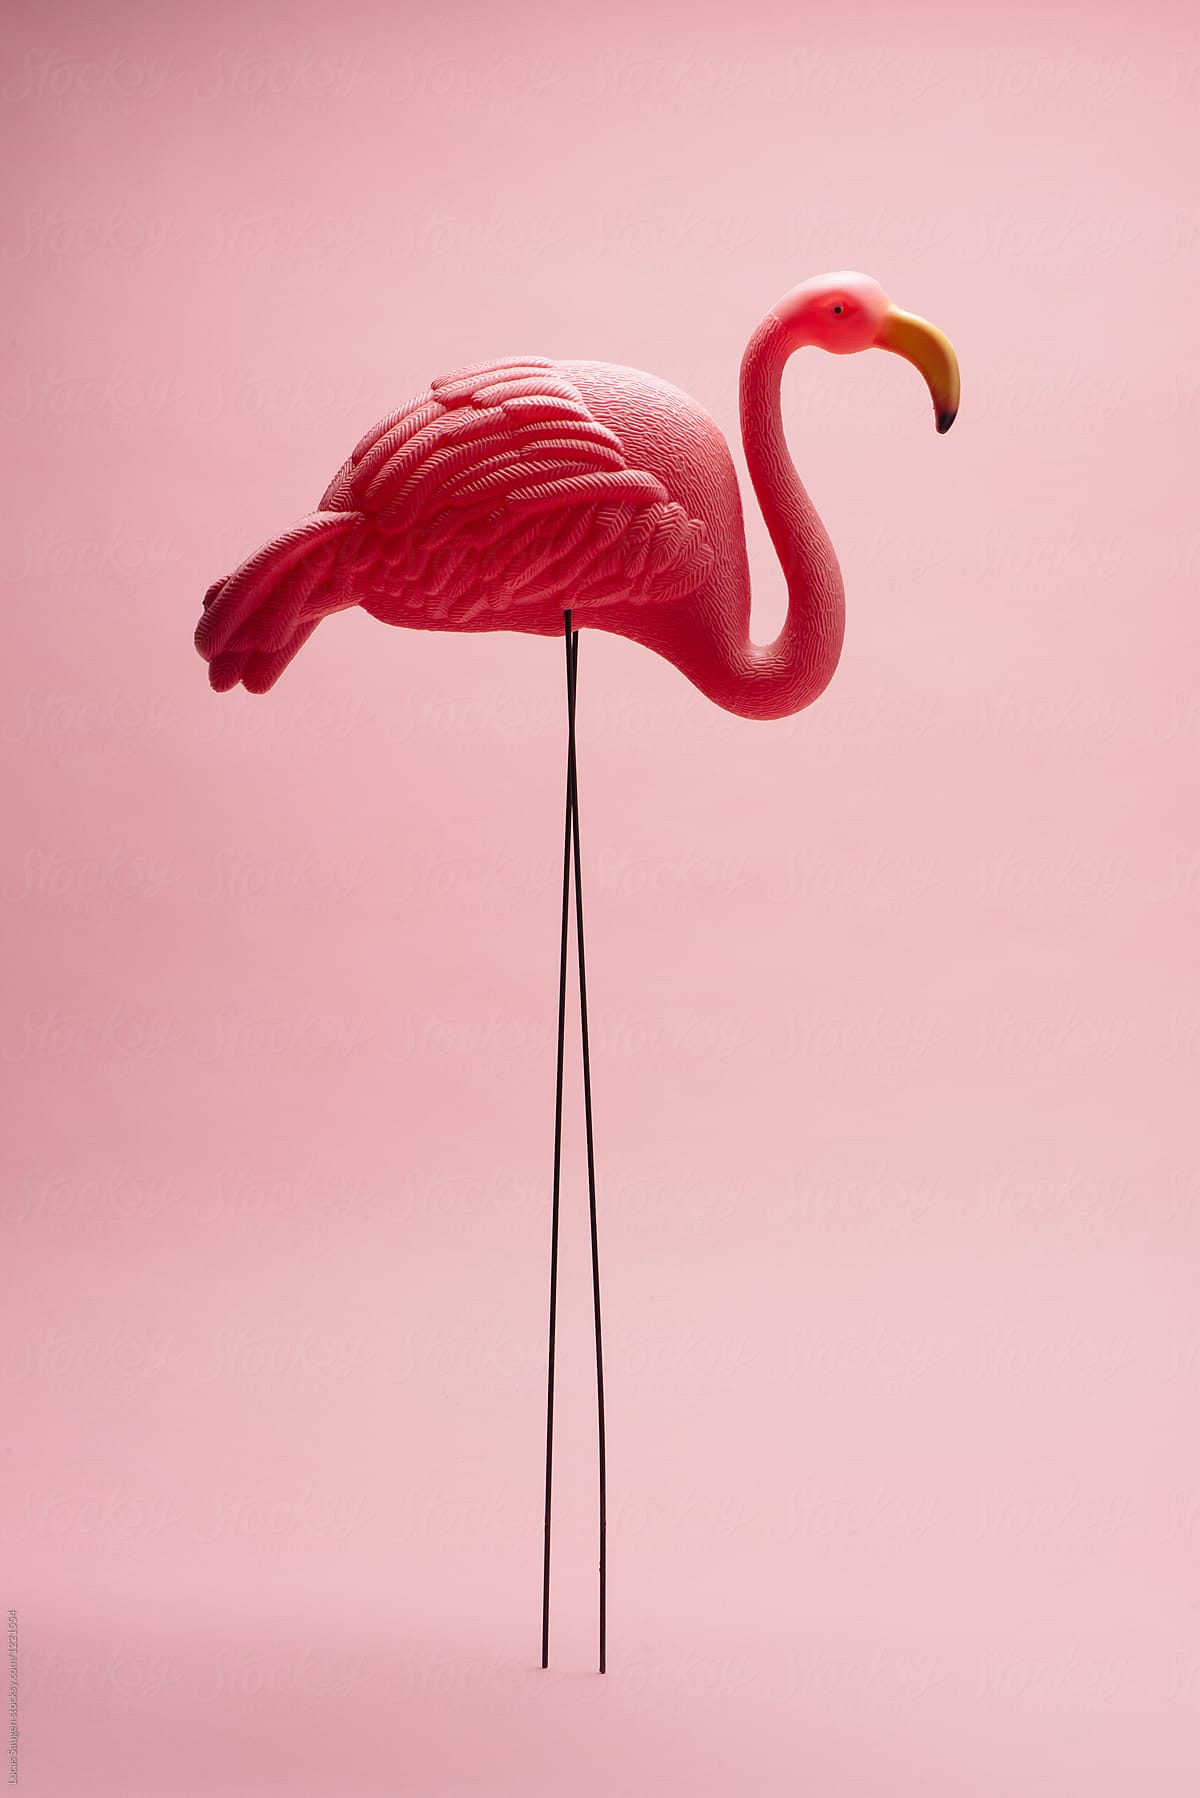 Pink flamingo shot on a pink background.